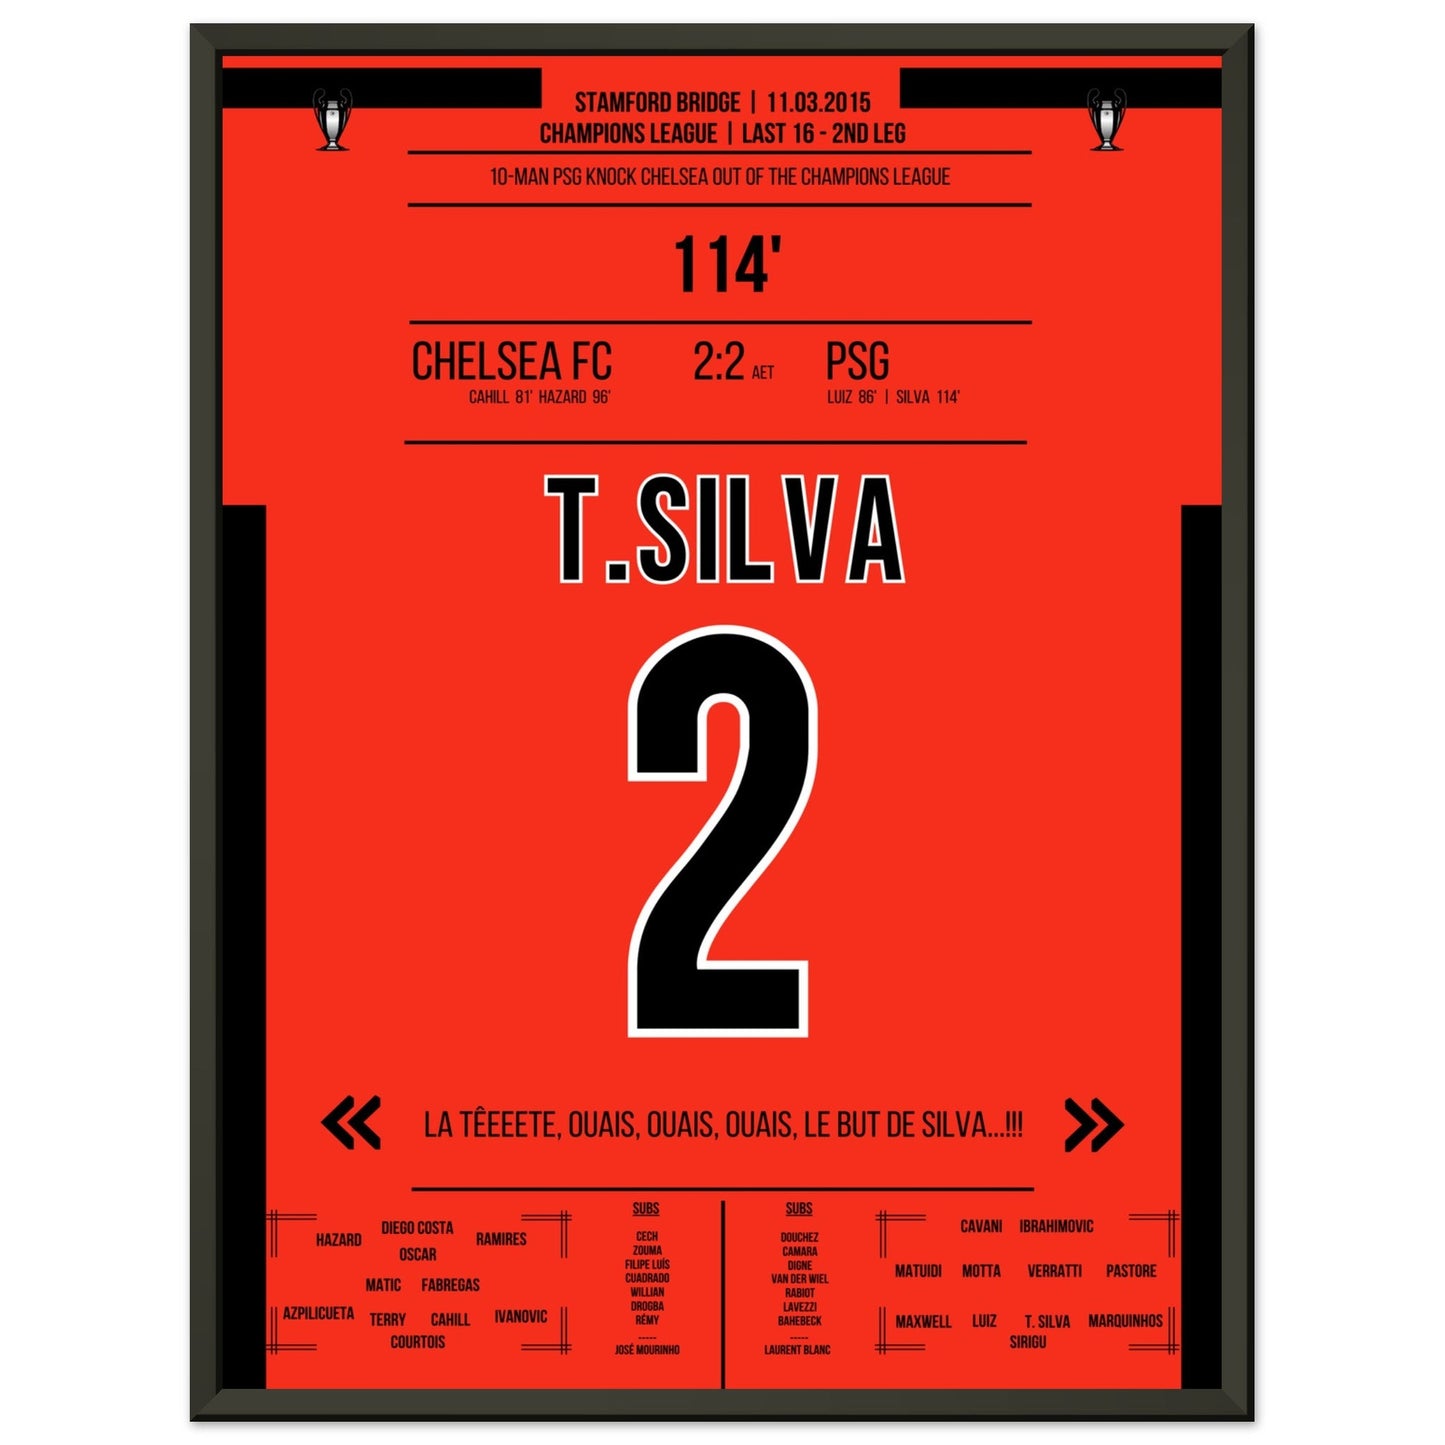 Thiago Silva's entscheidendes Kopfballtor im CL Achtelfinale gegen Chelsea 2015